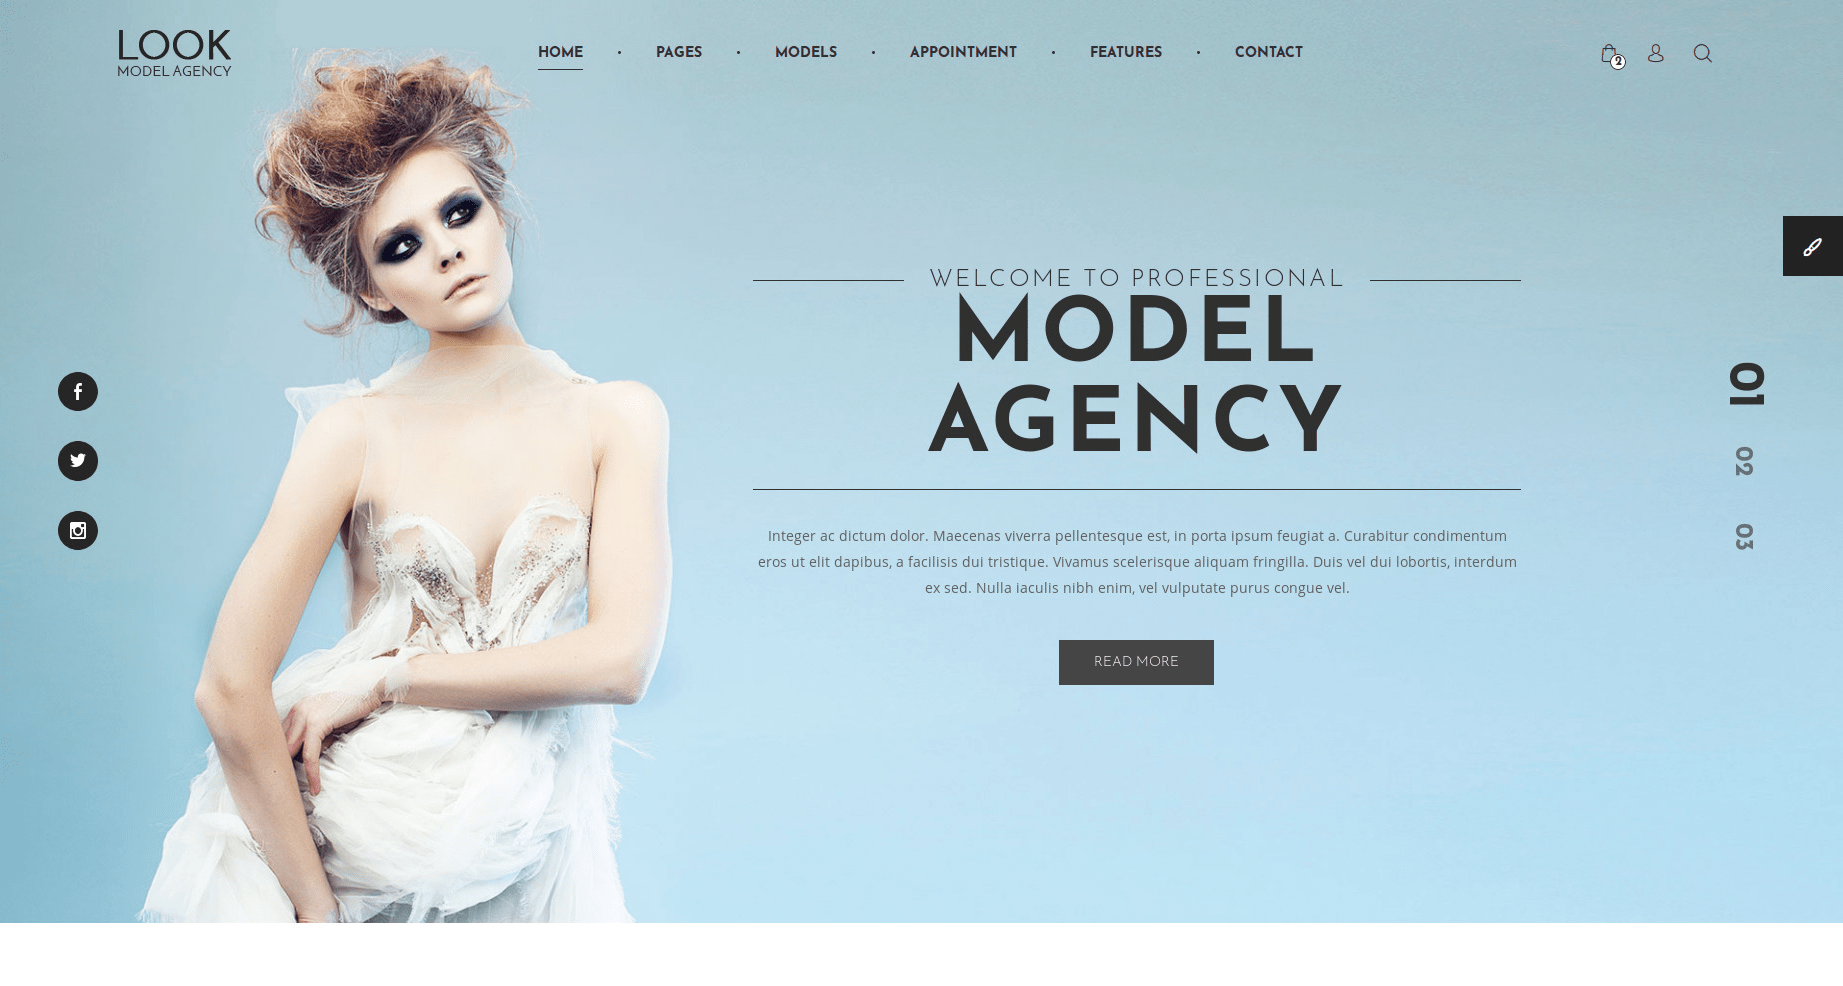 look model agency